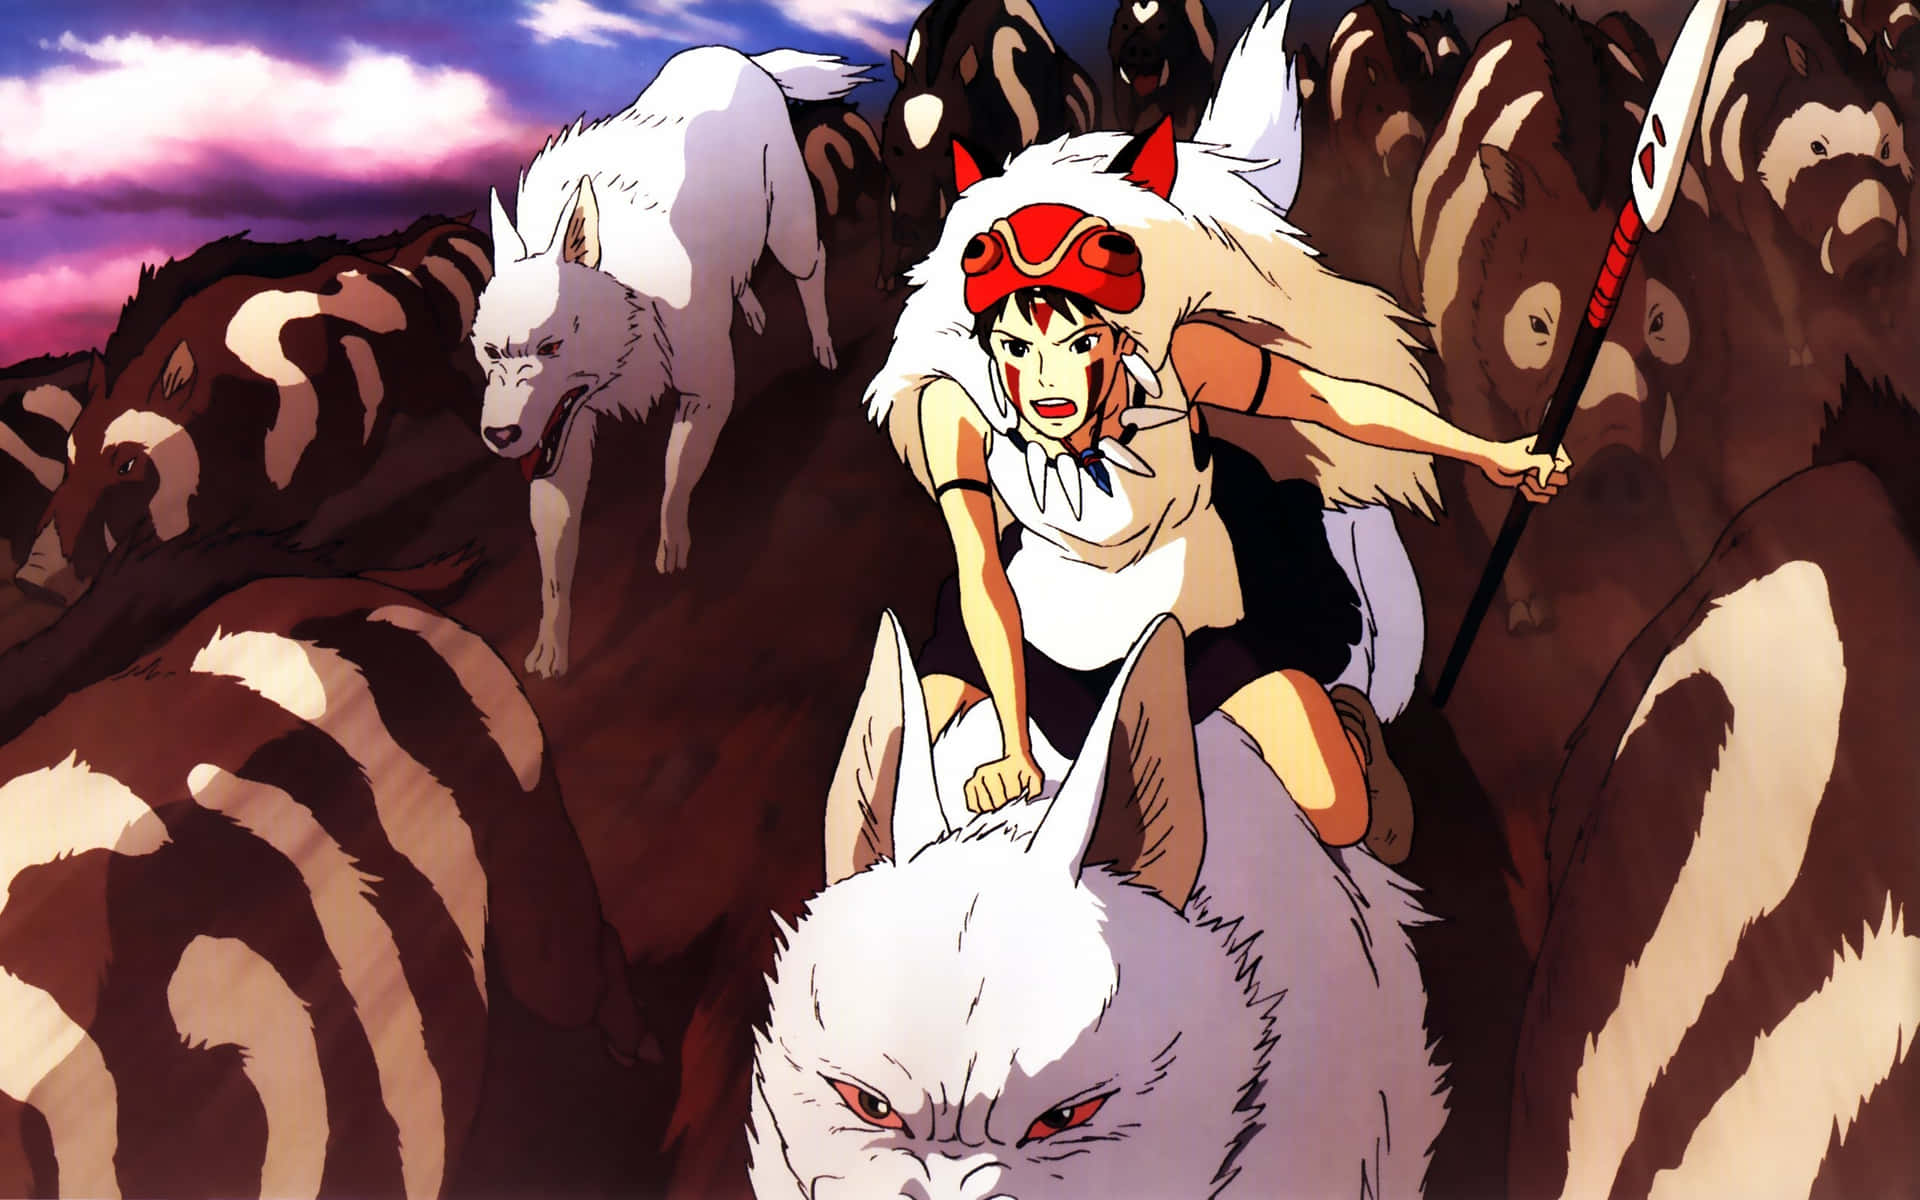 Unforgettable characters and breathtaking landscapes are the hallmark of Studio Ghibli's Princess Mononoke. Wallpaper